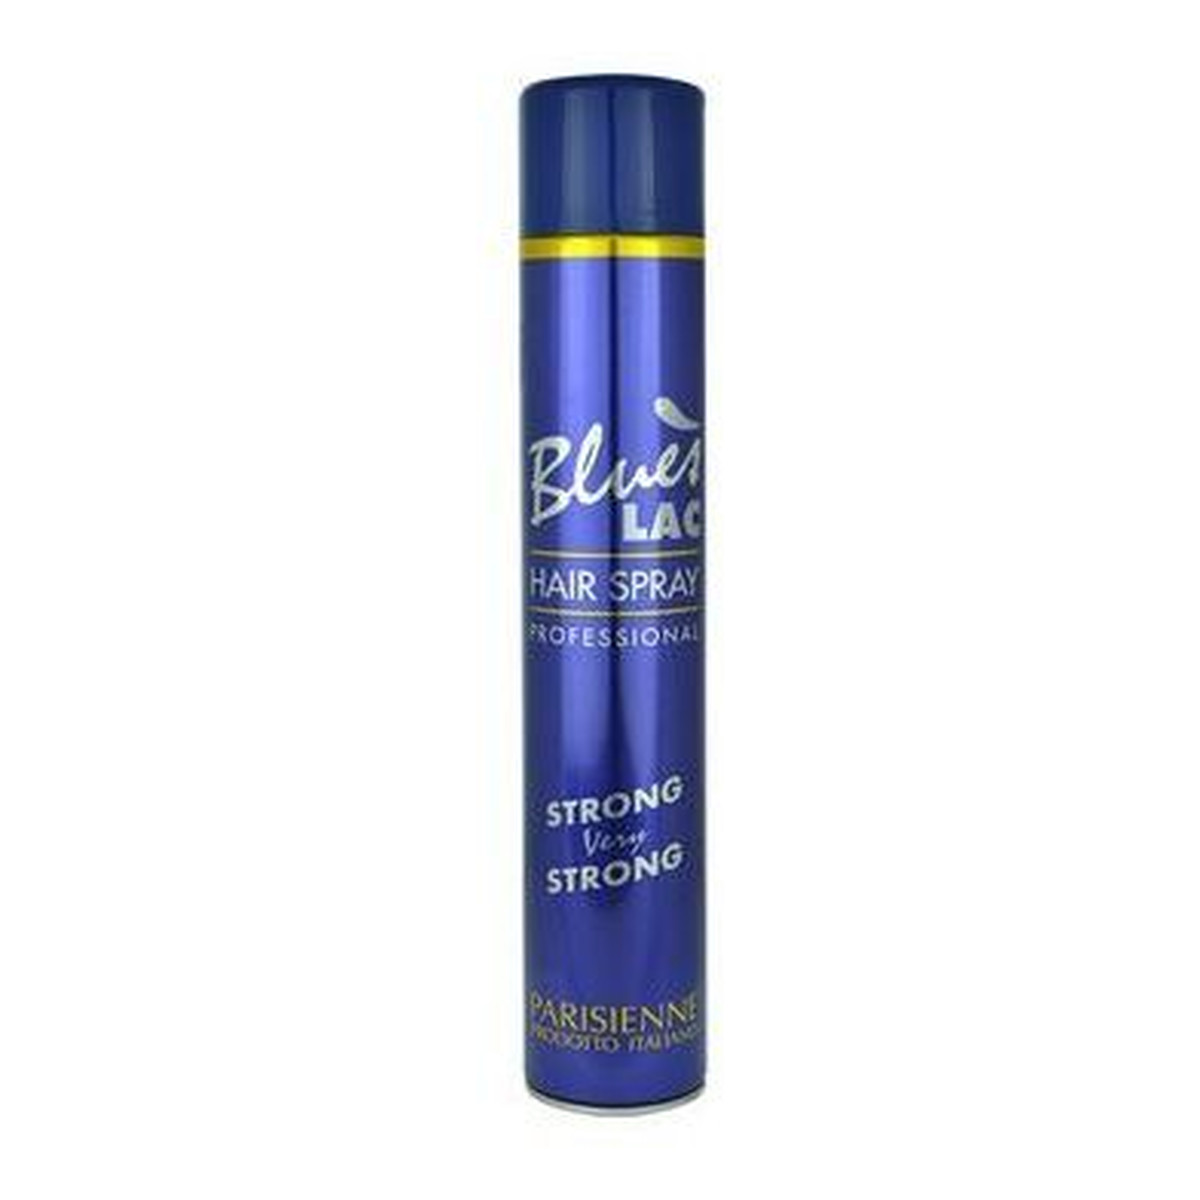 Kallos Parisienne Professional Blues Lac Hair Spray lakier do włosów Strong Very Strong 750ml